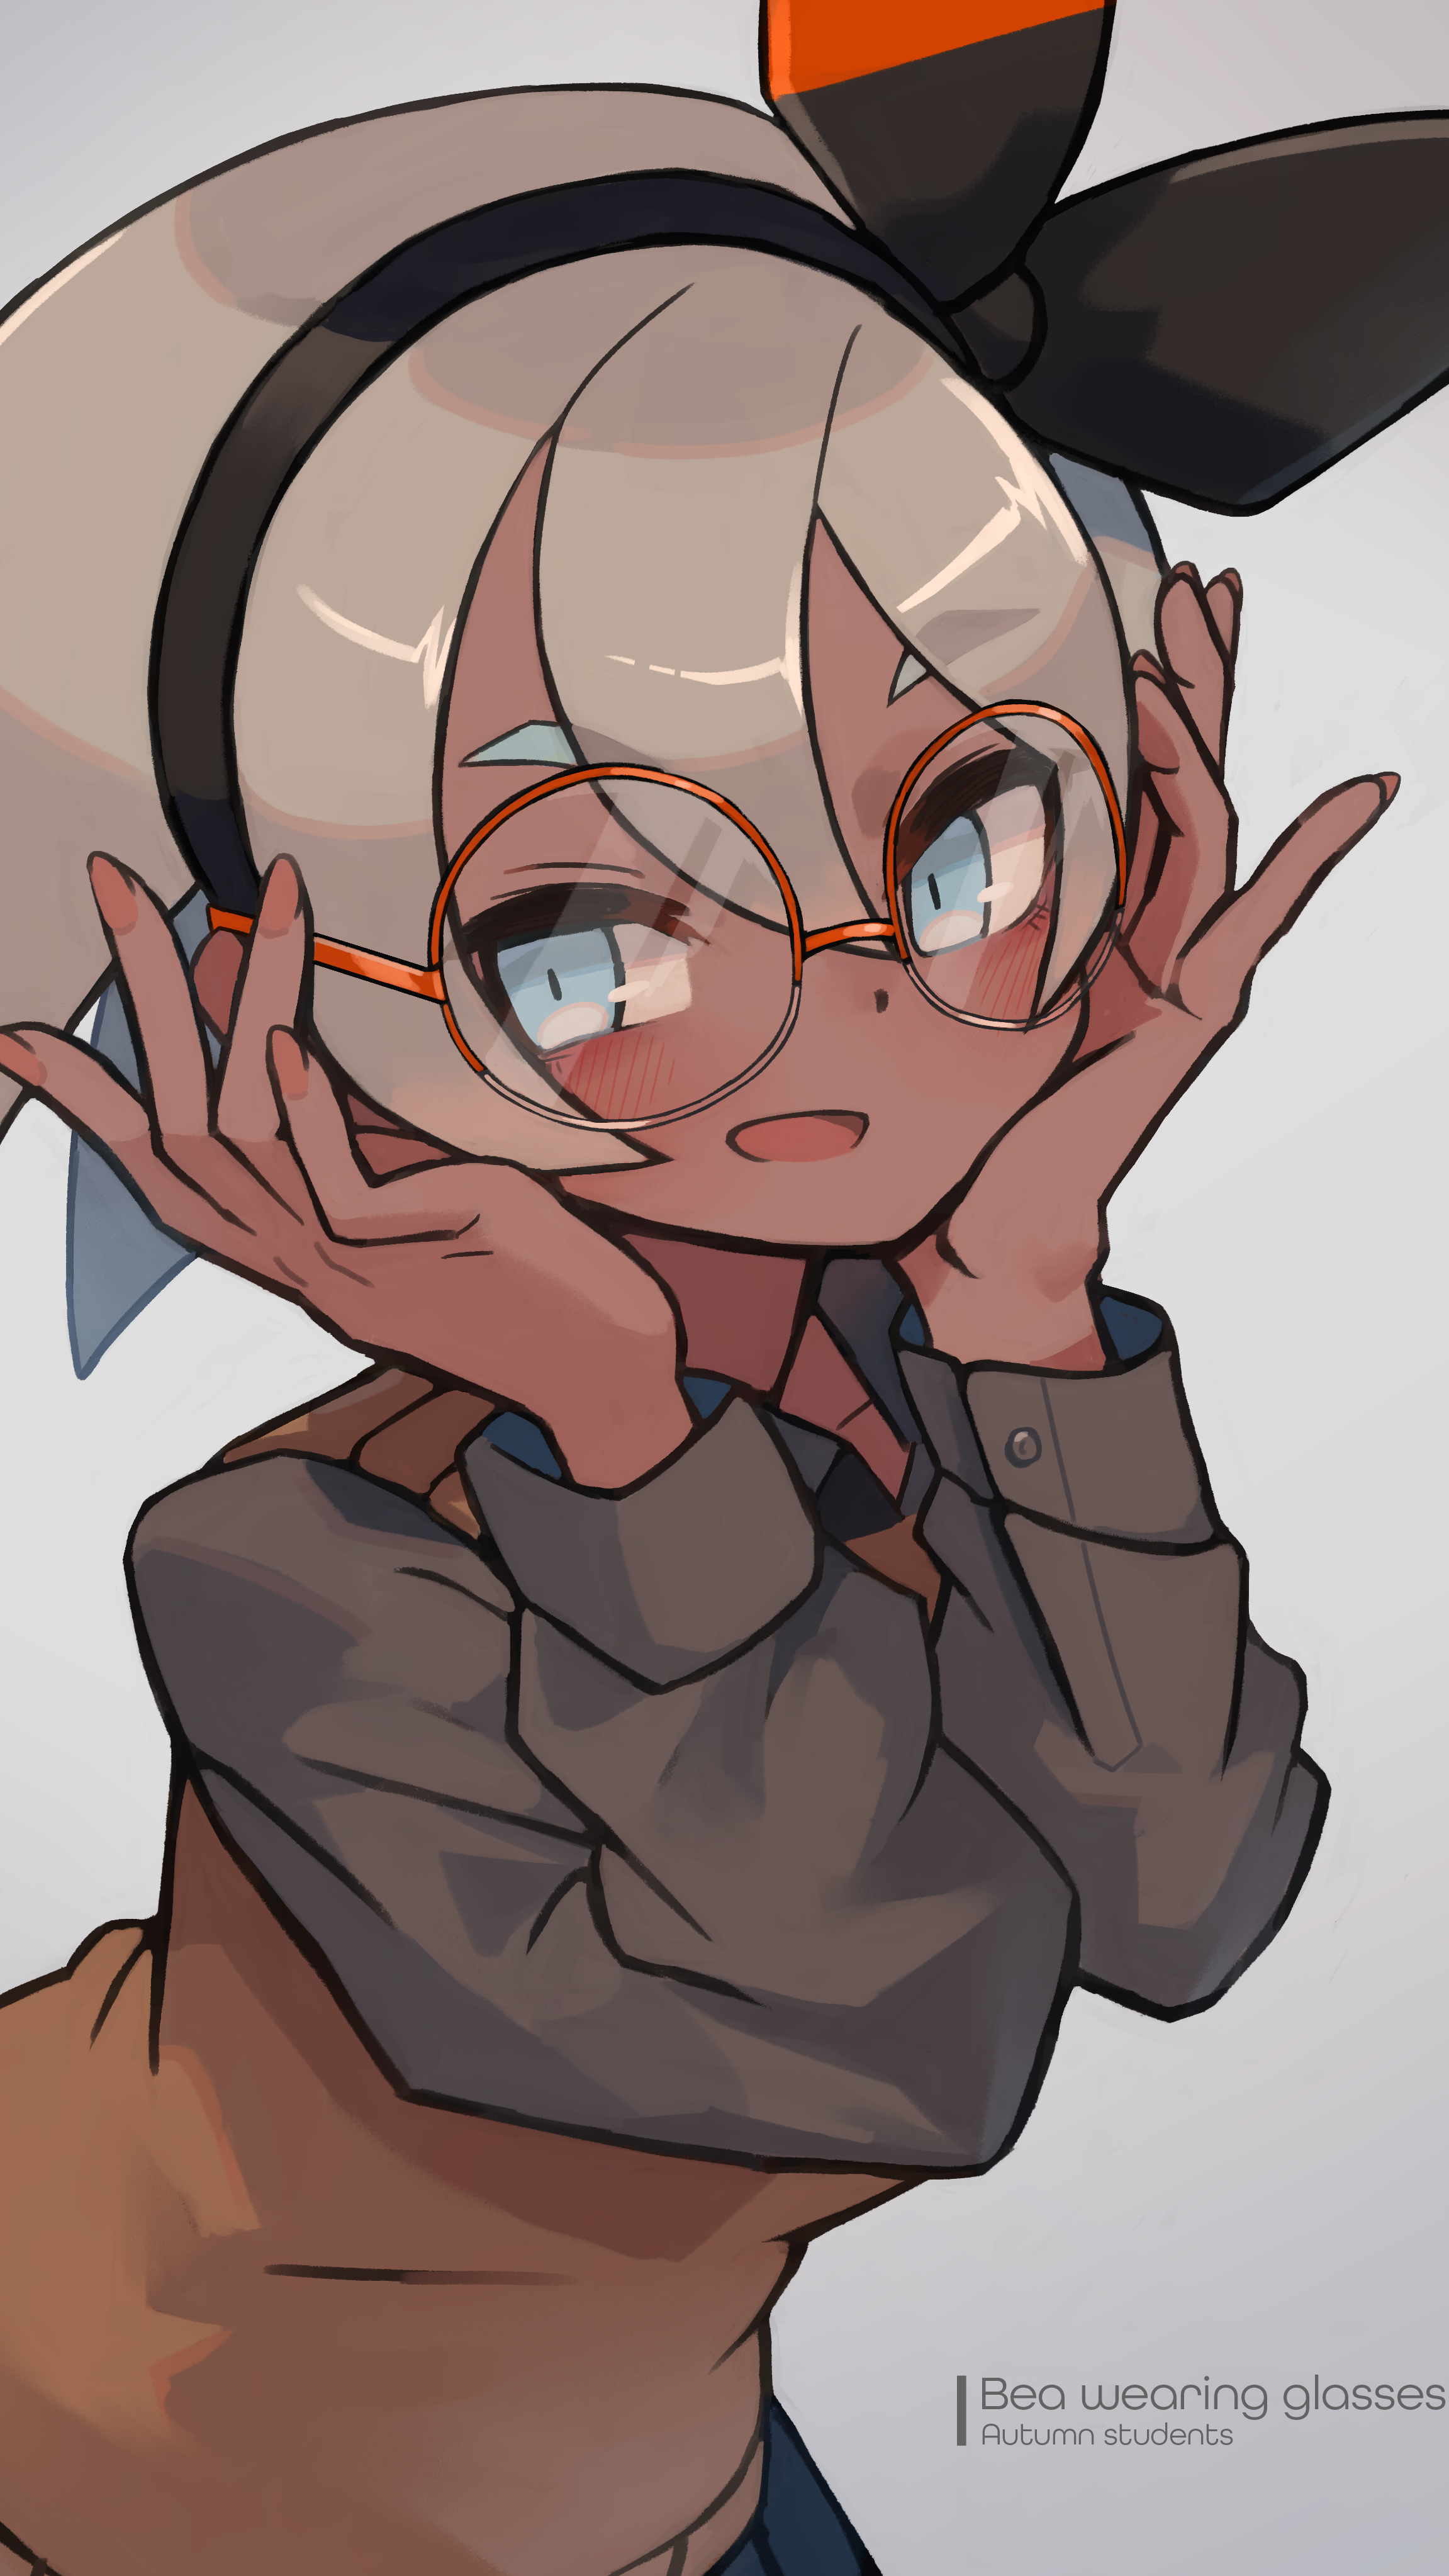 Bea wearing glasses [Pokemon] (2303×4093)